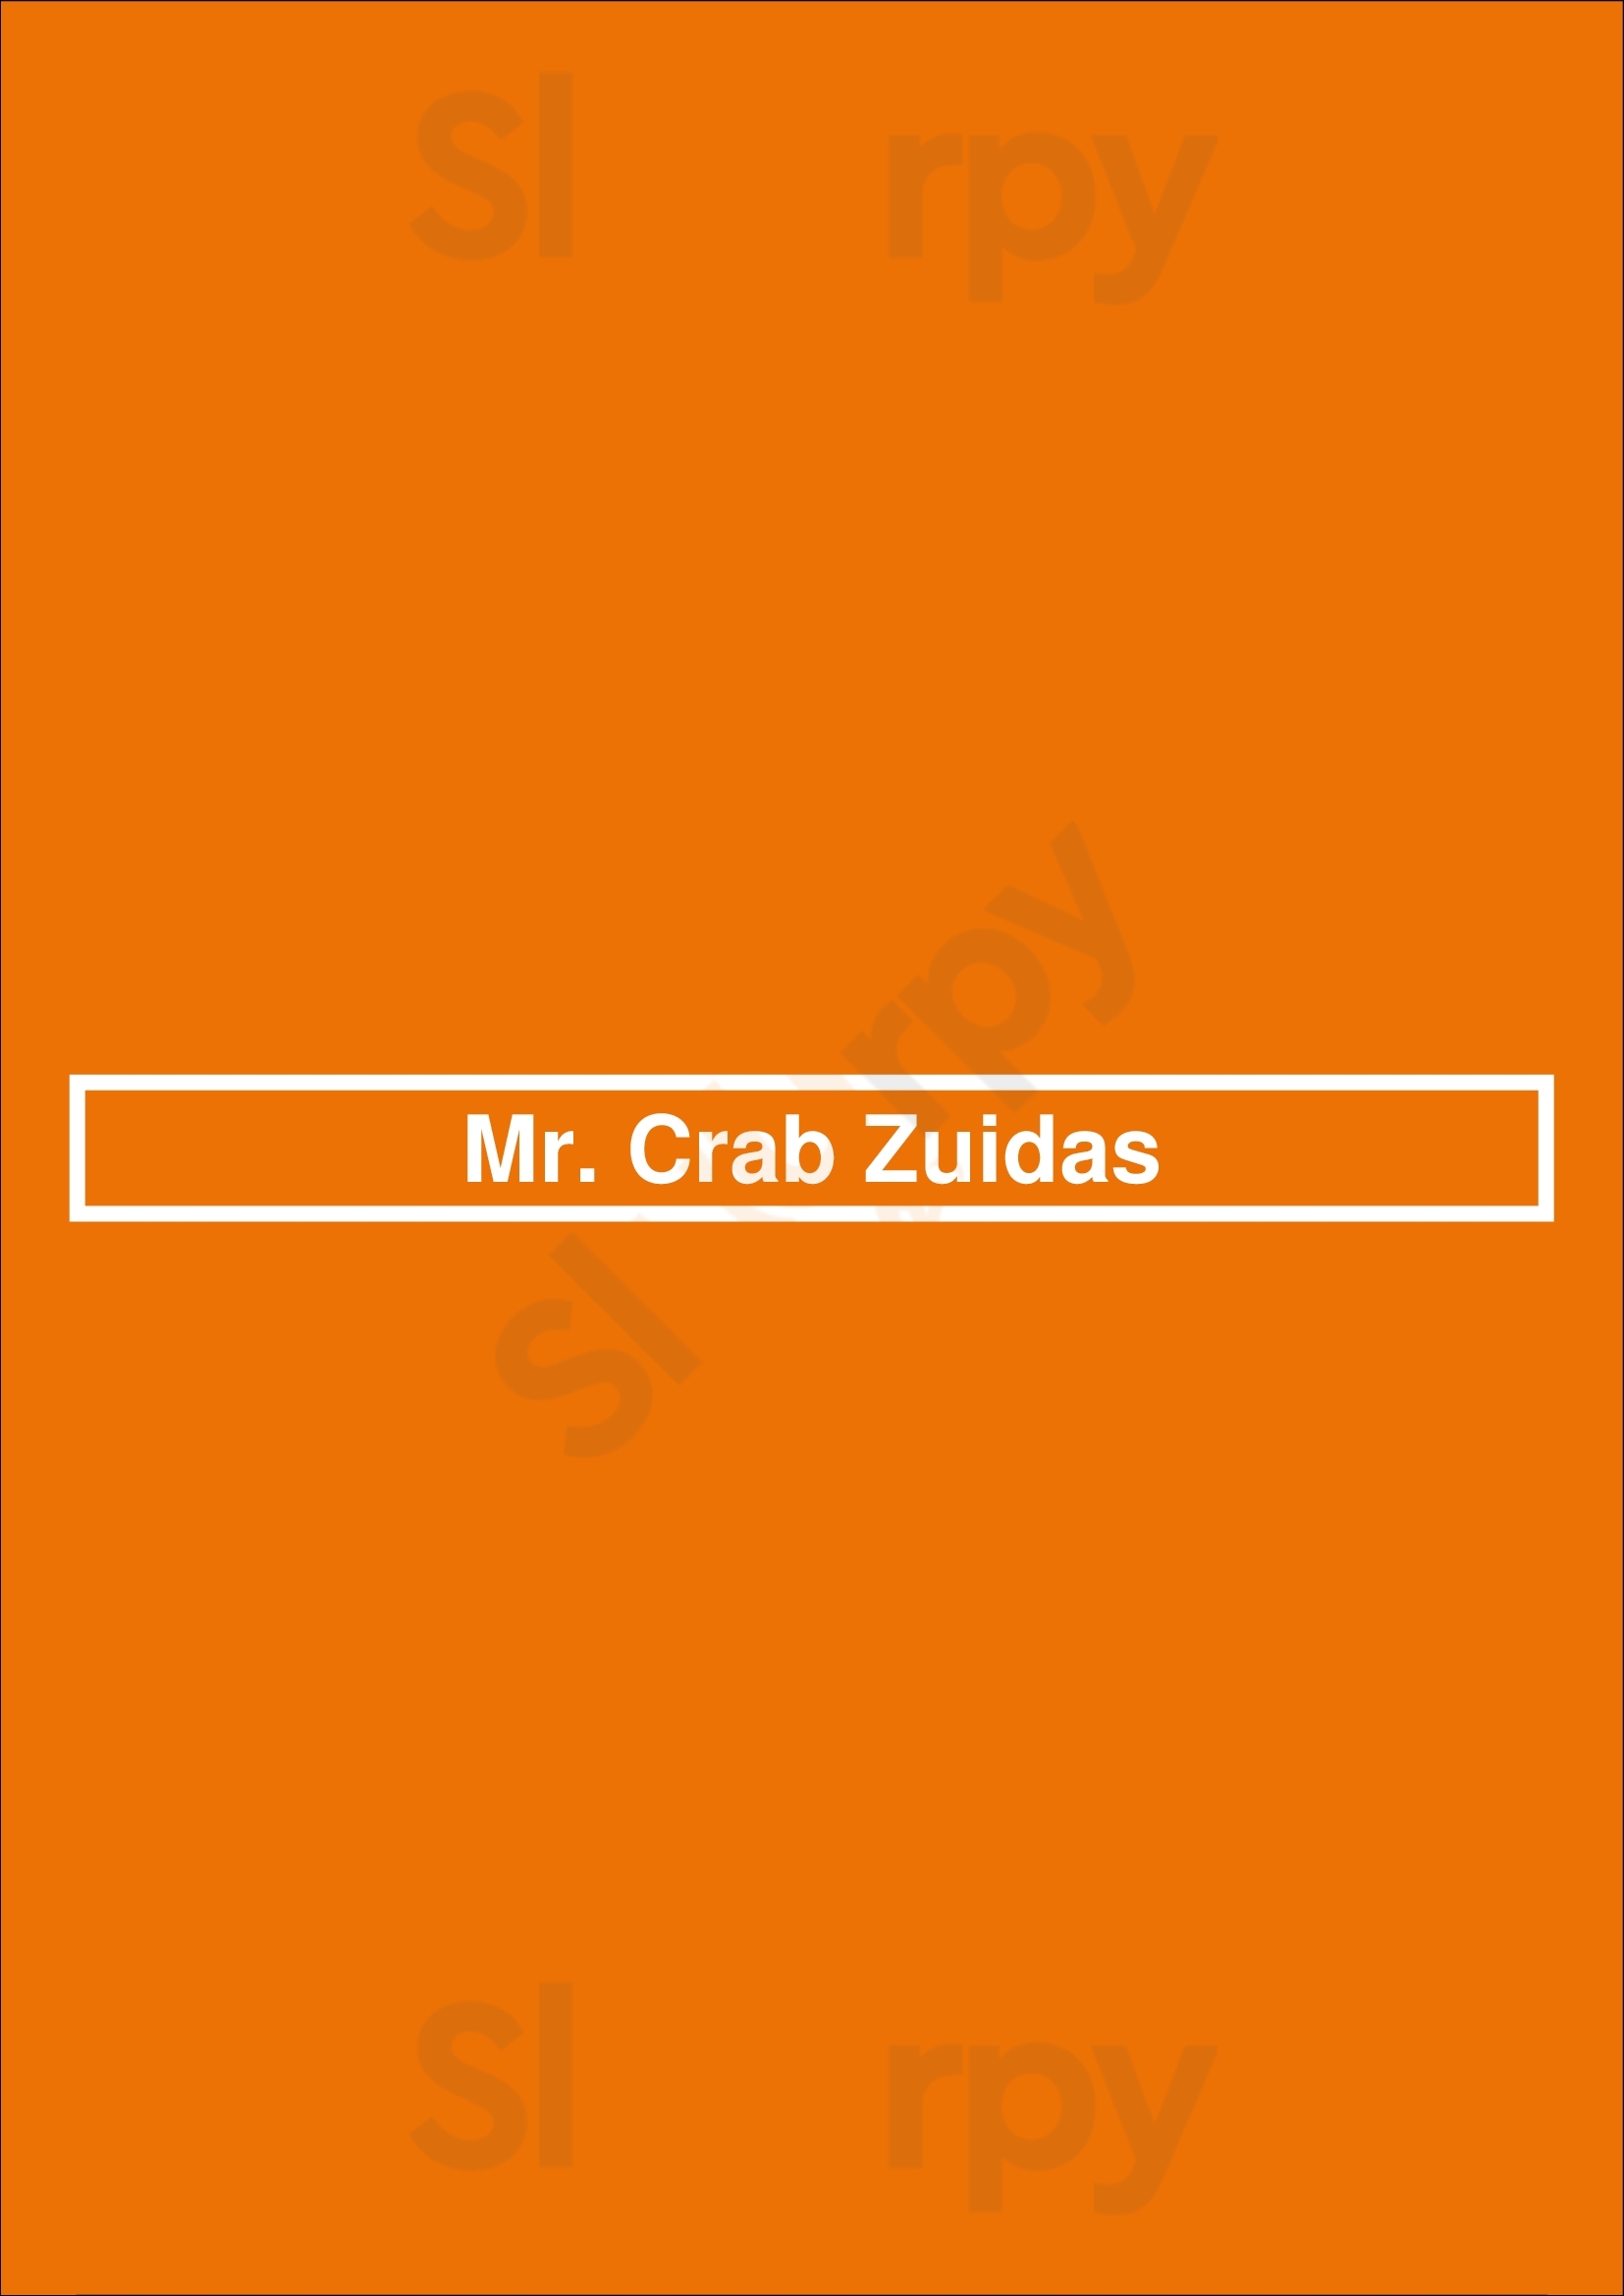 Mr. Crab Zuidas Amsterdam Menu - 1